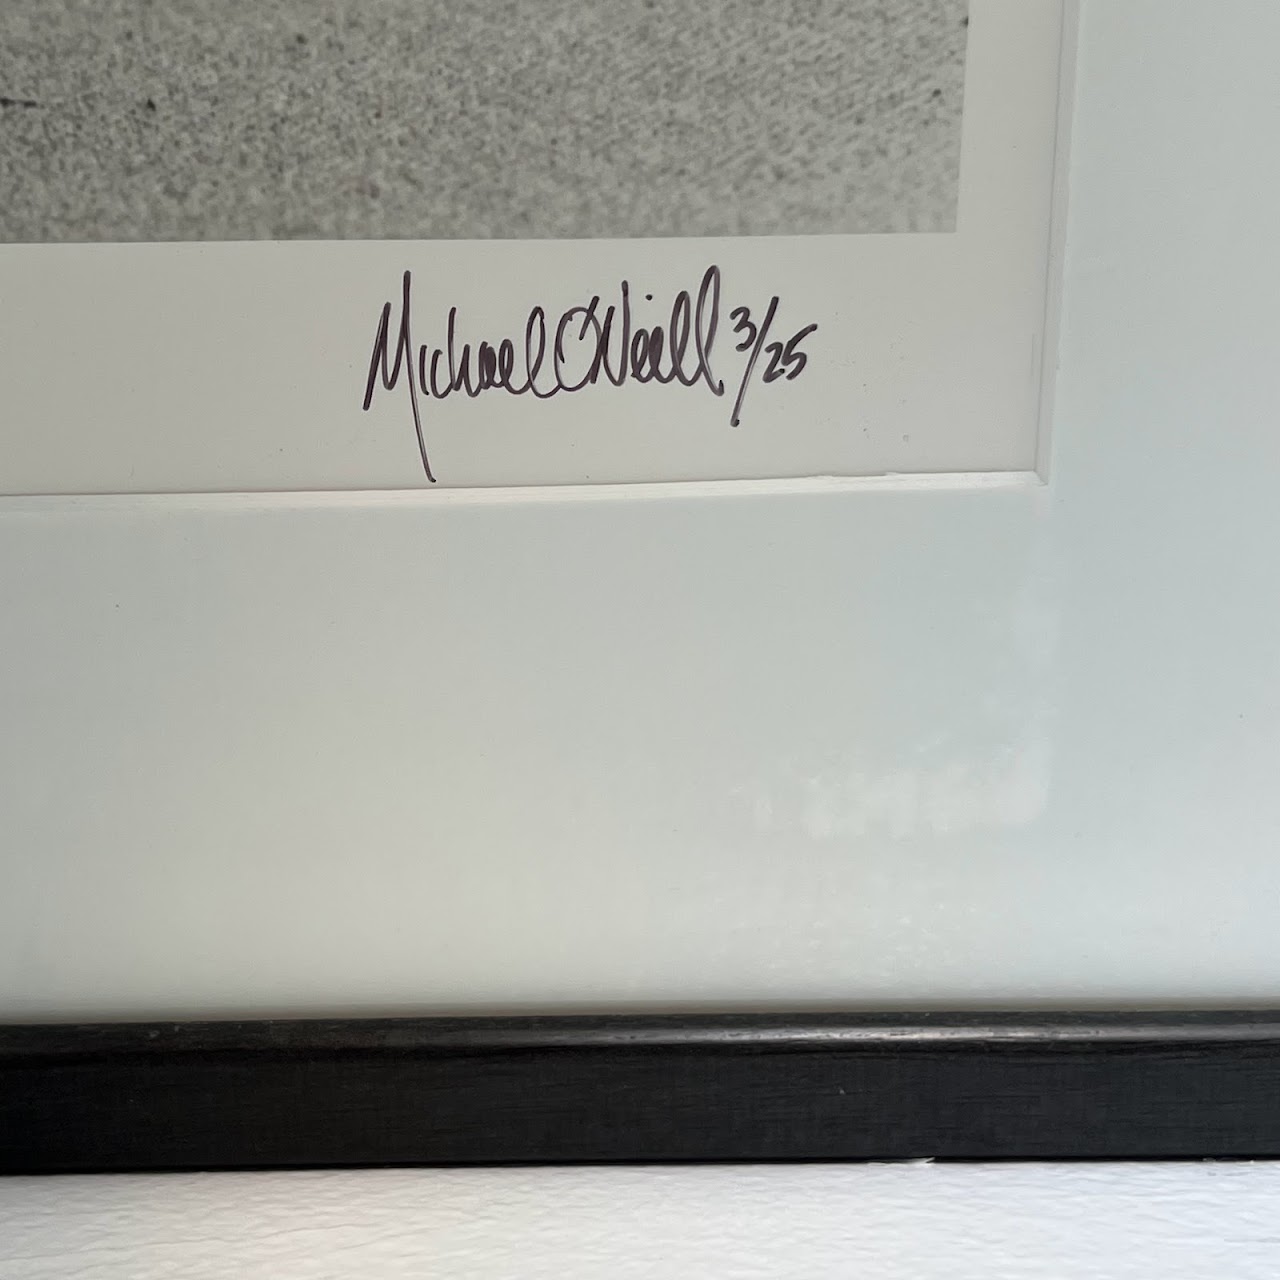 Michael O'Neill Signed 'Sleeping Beauty' Zoobabies Photograph